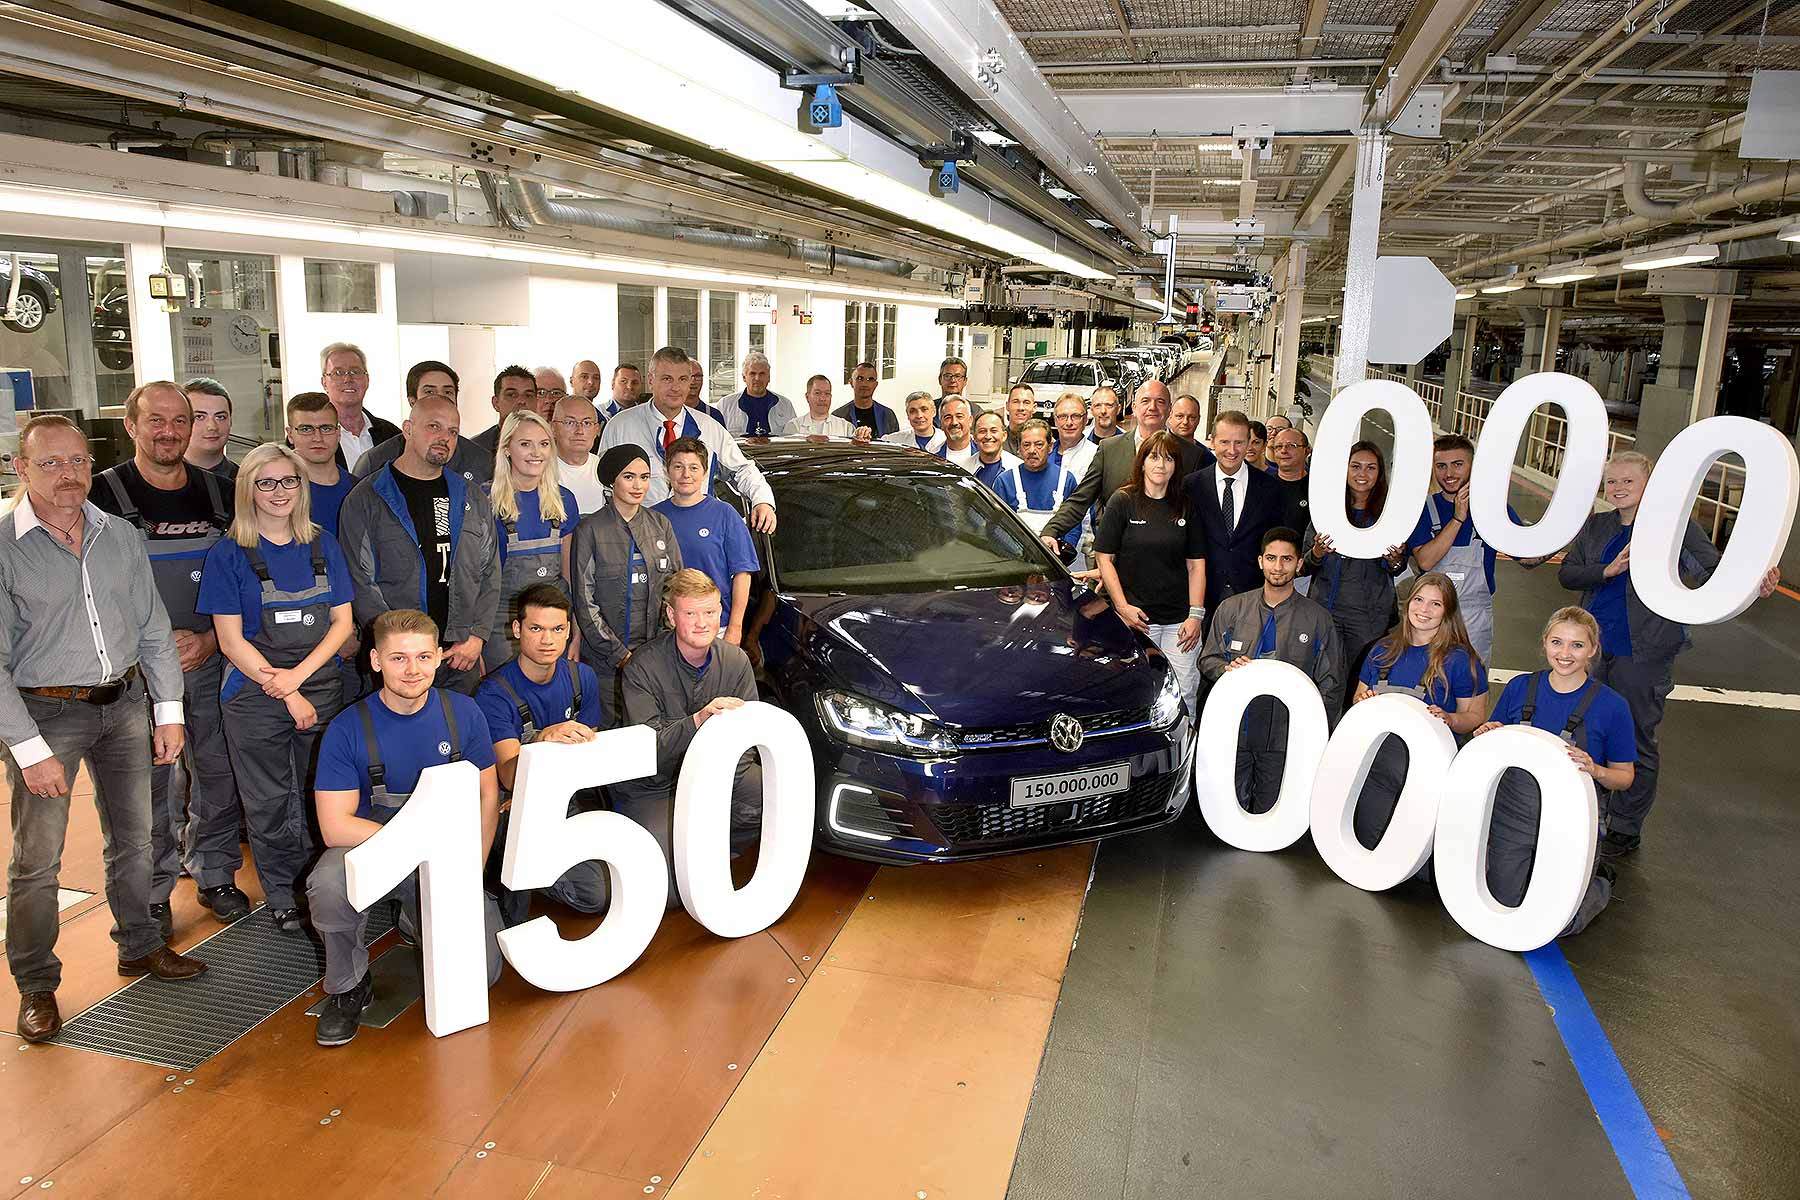 Volkswagen 150 million